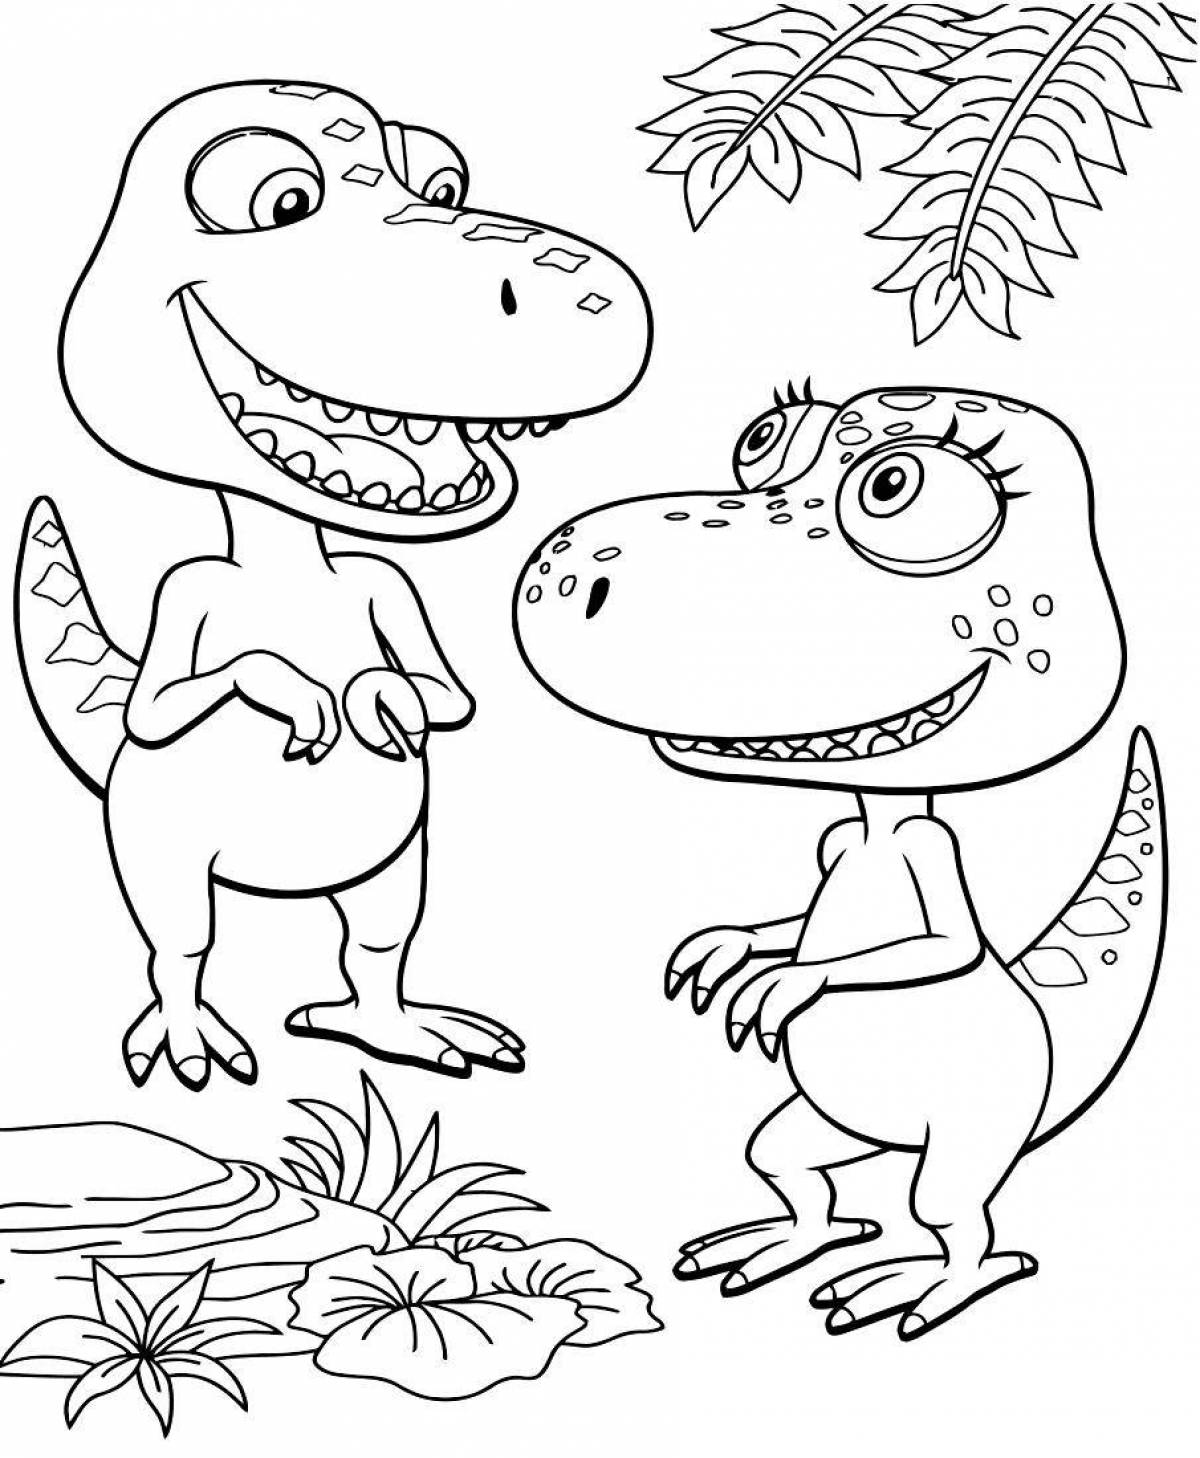 Intriguing Tarbosaurus coloring book for kids